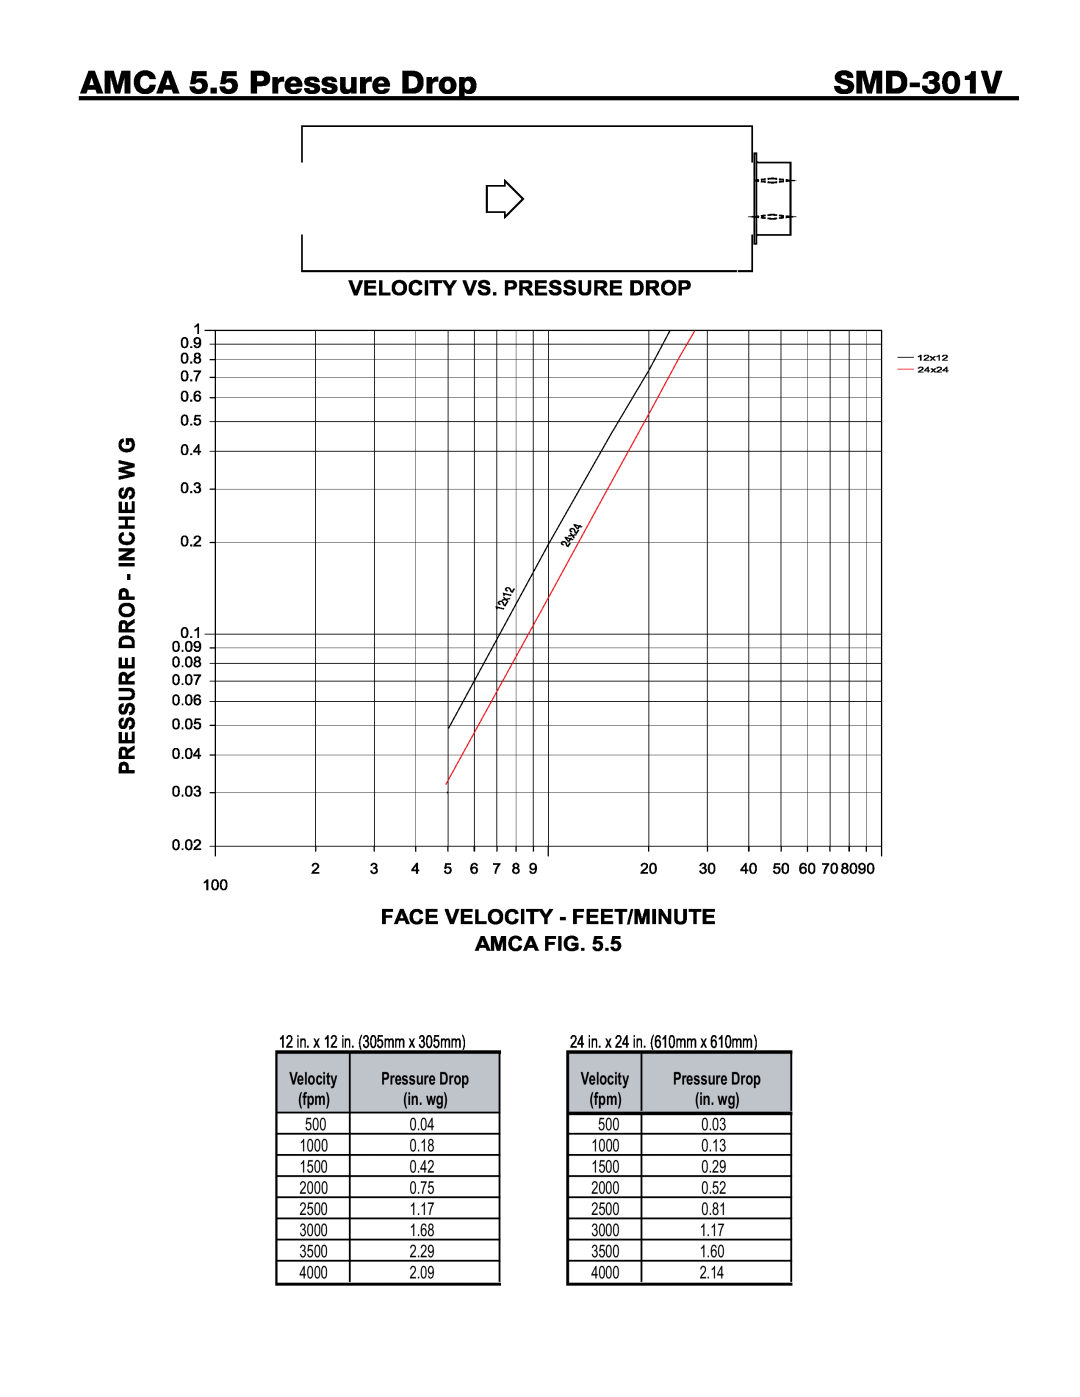 Greenheck Fan SMD-301V dimensions AMCA 5.5 Pressure Drop, in. wg 